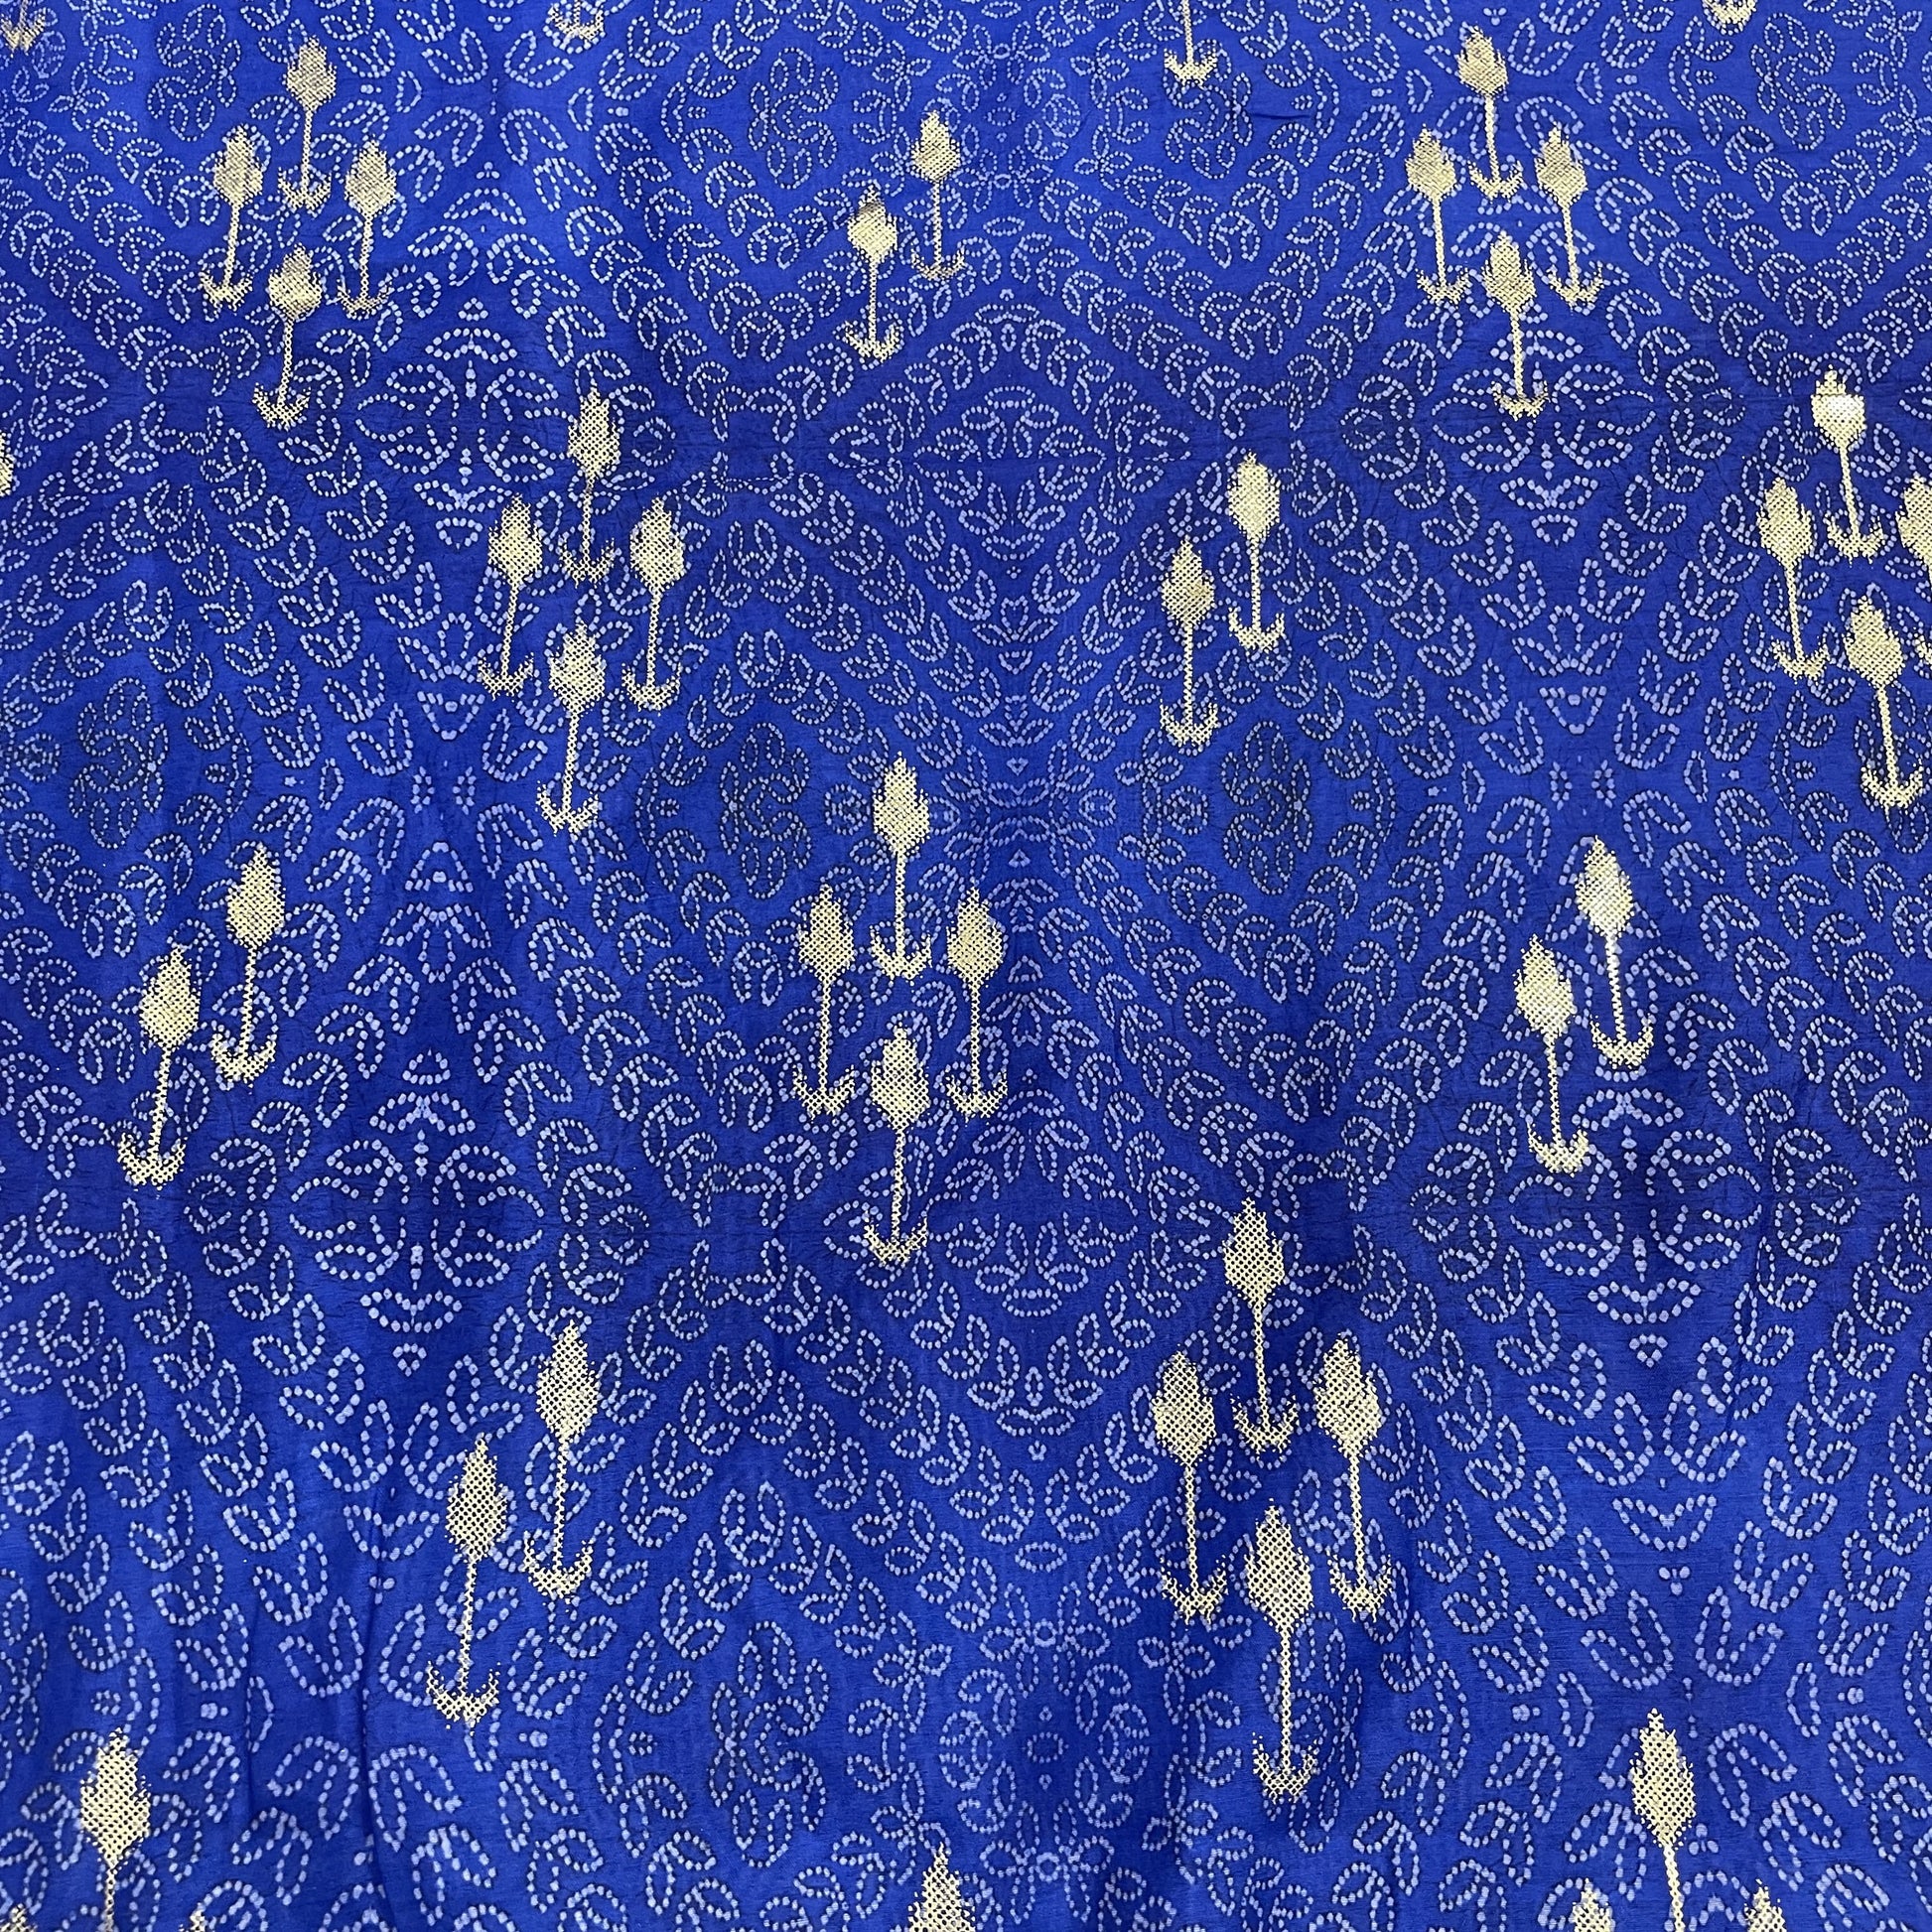 Navy Blue Bandhani With Foil Chanderi Fabric - TradeUNO